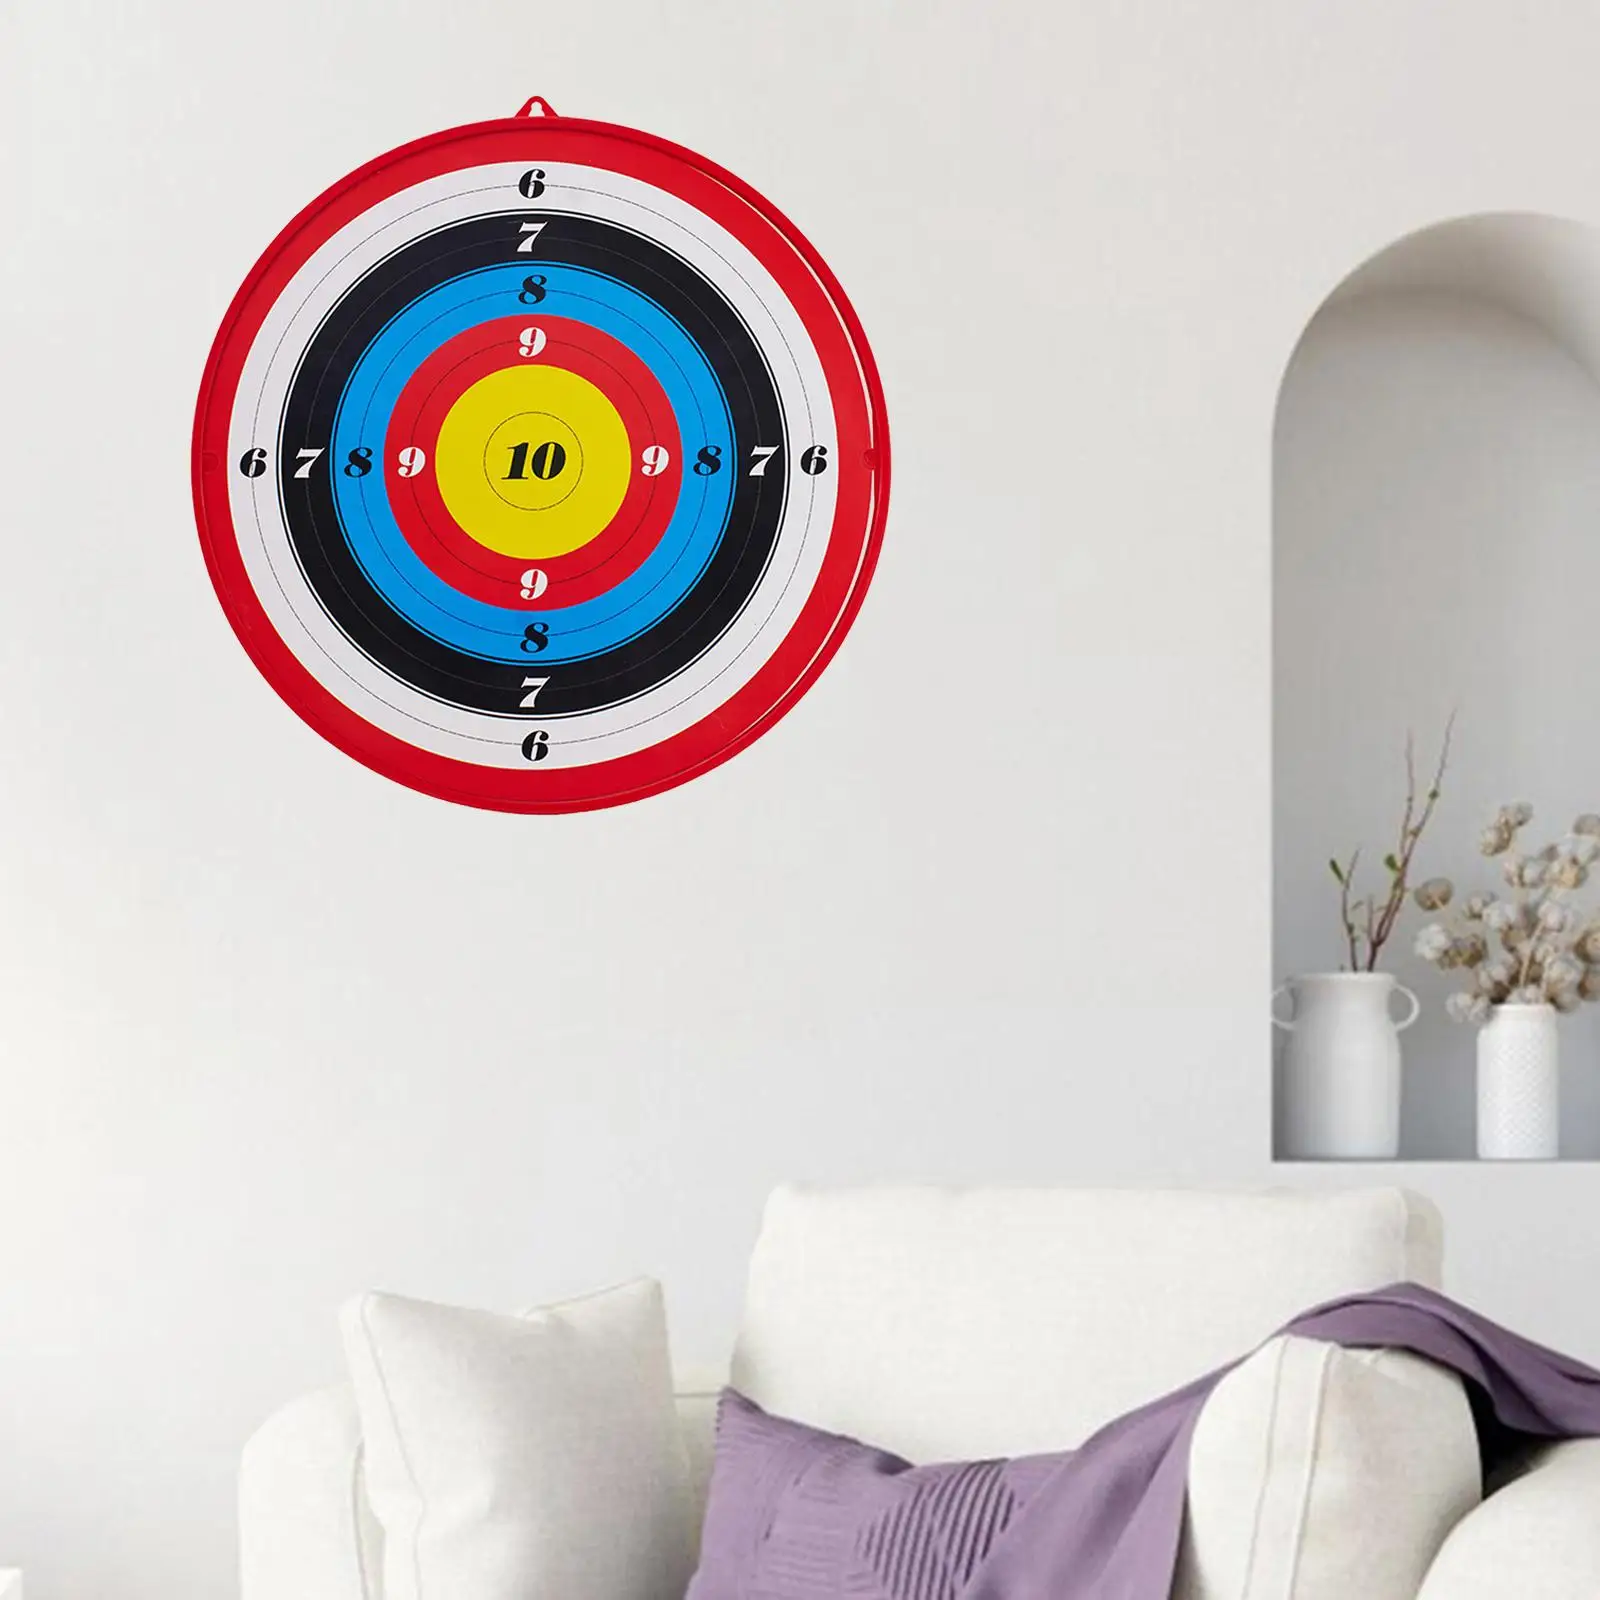 Hanging Target Suction Cup Blasters Indoor Outdoor Archery Toy Gun for Kids